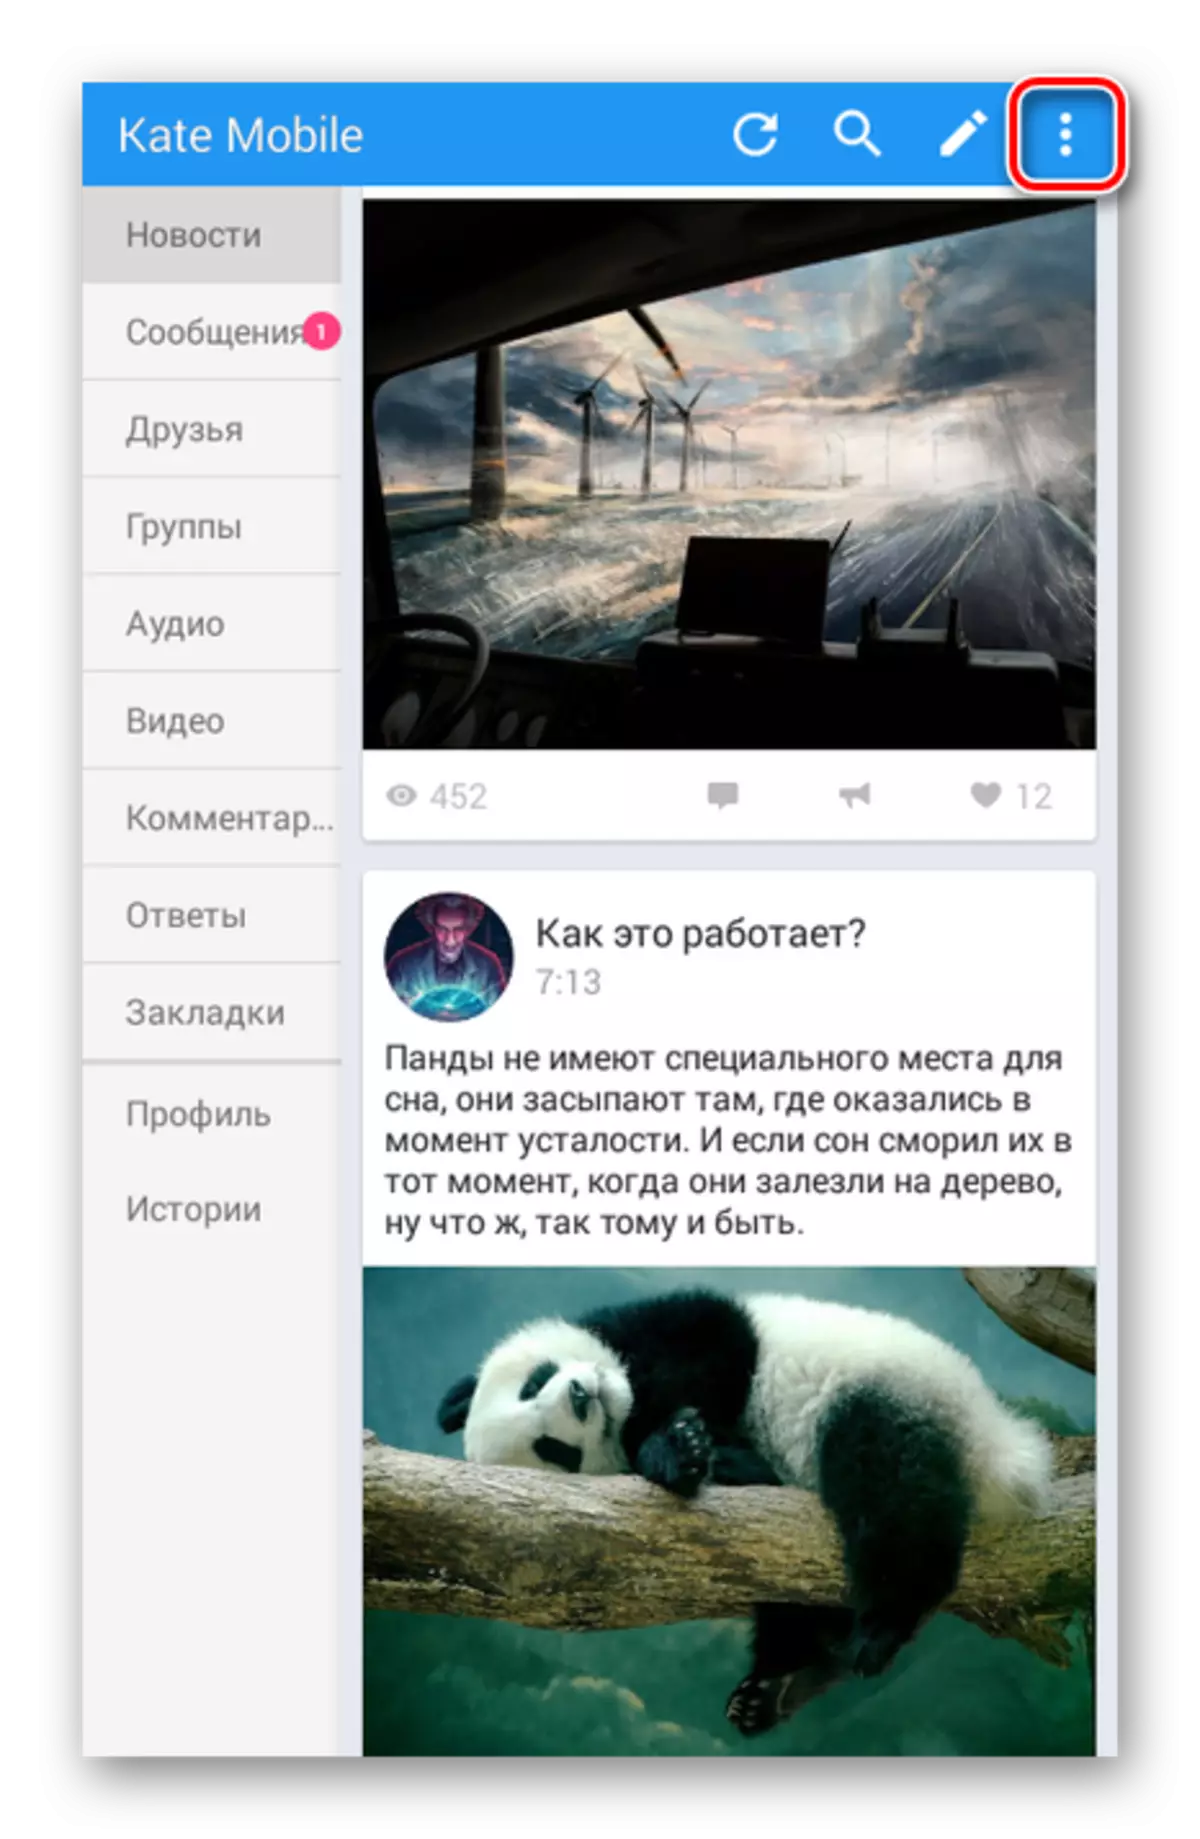 Mur fil-menu f'Kate Mobile fuq Android